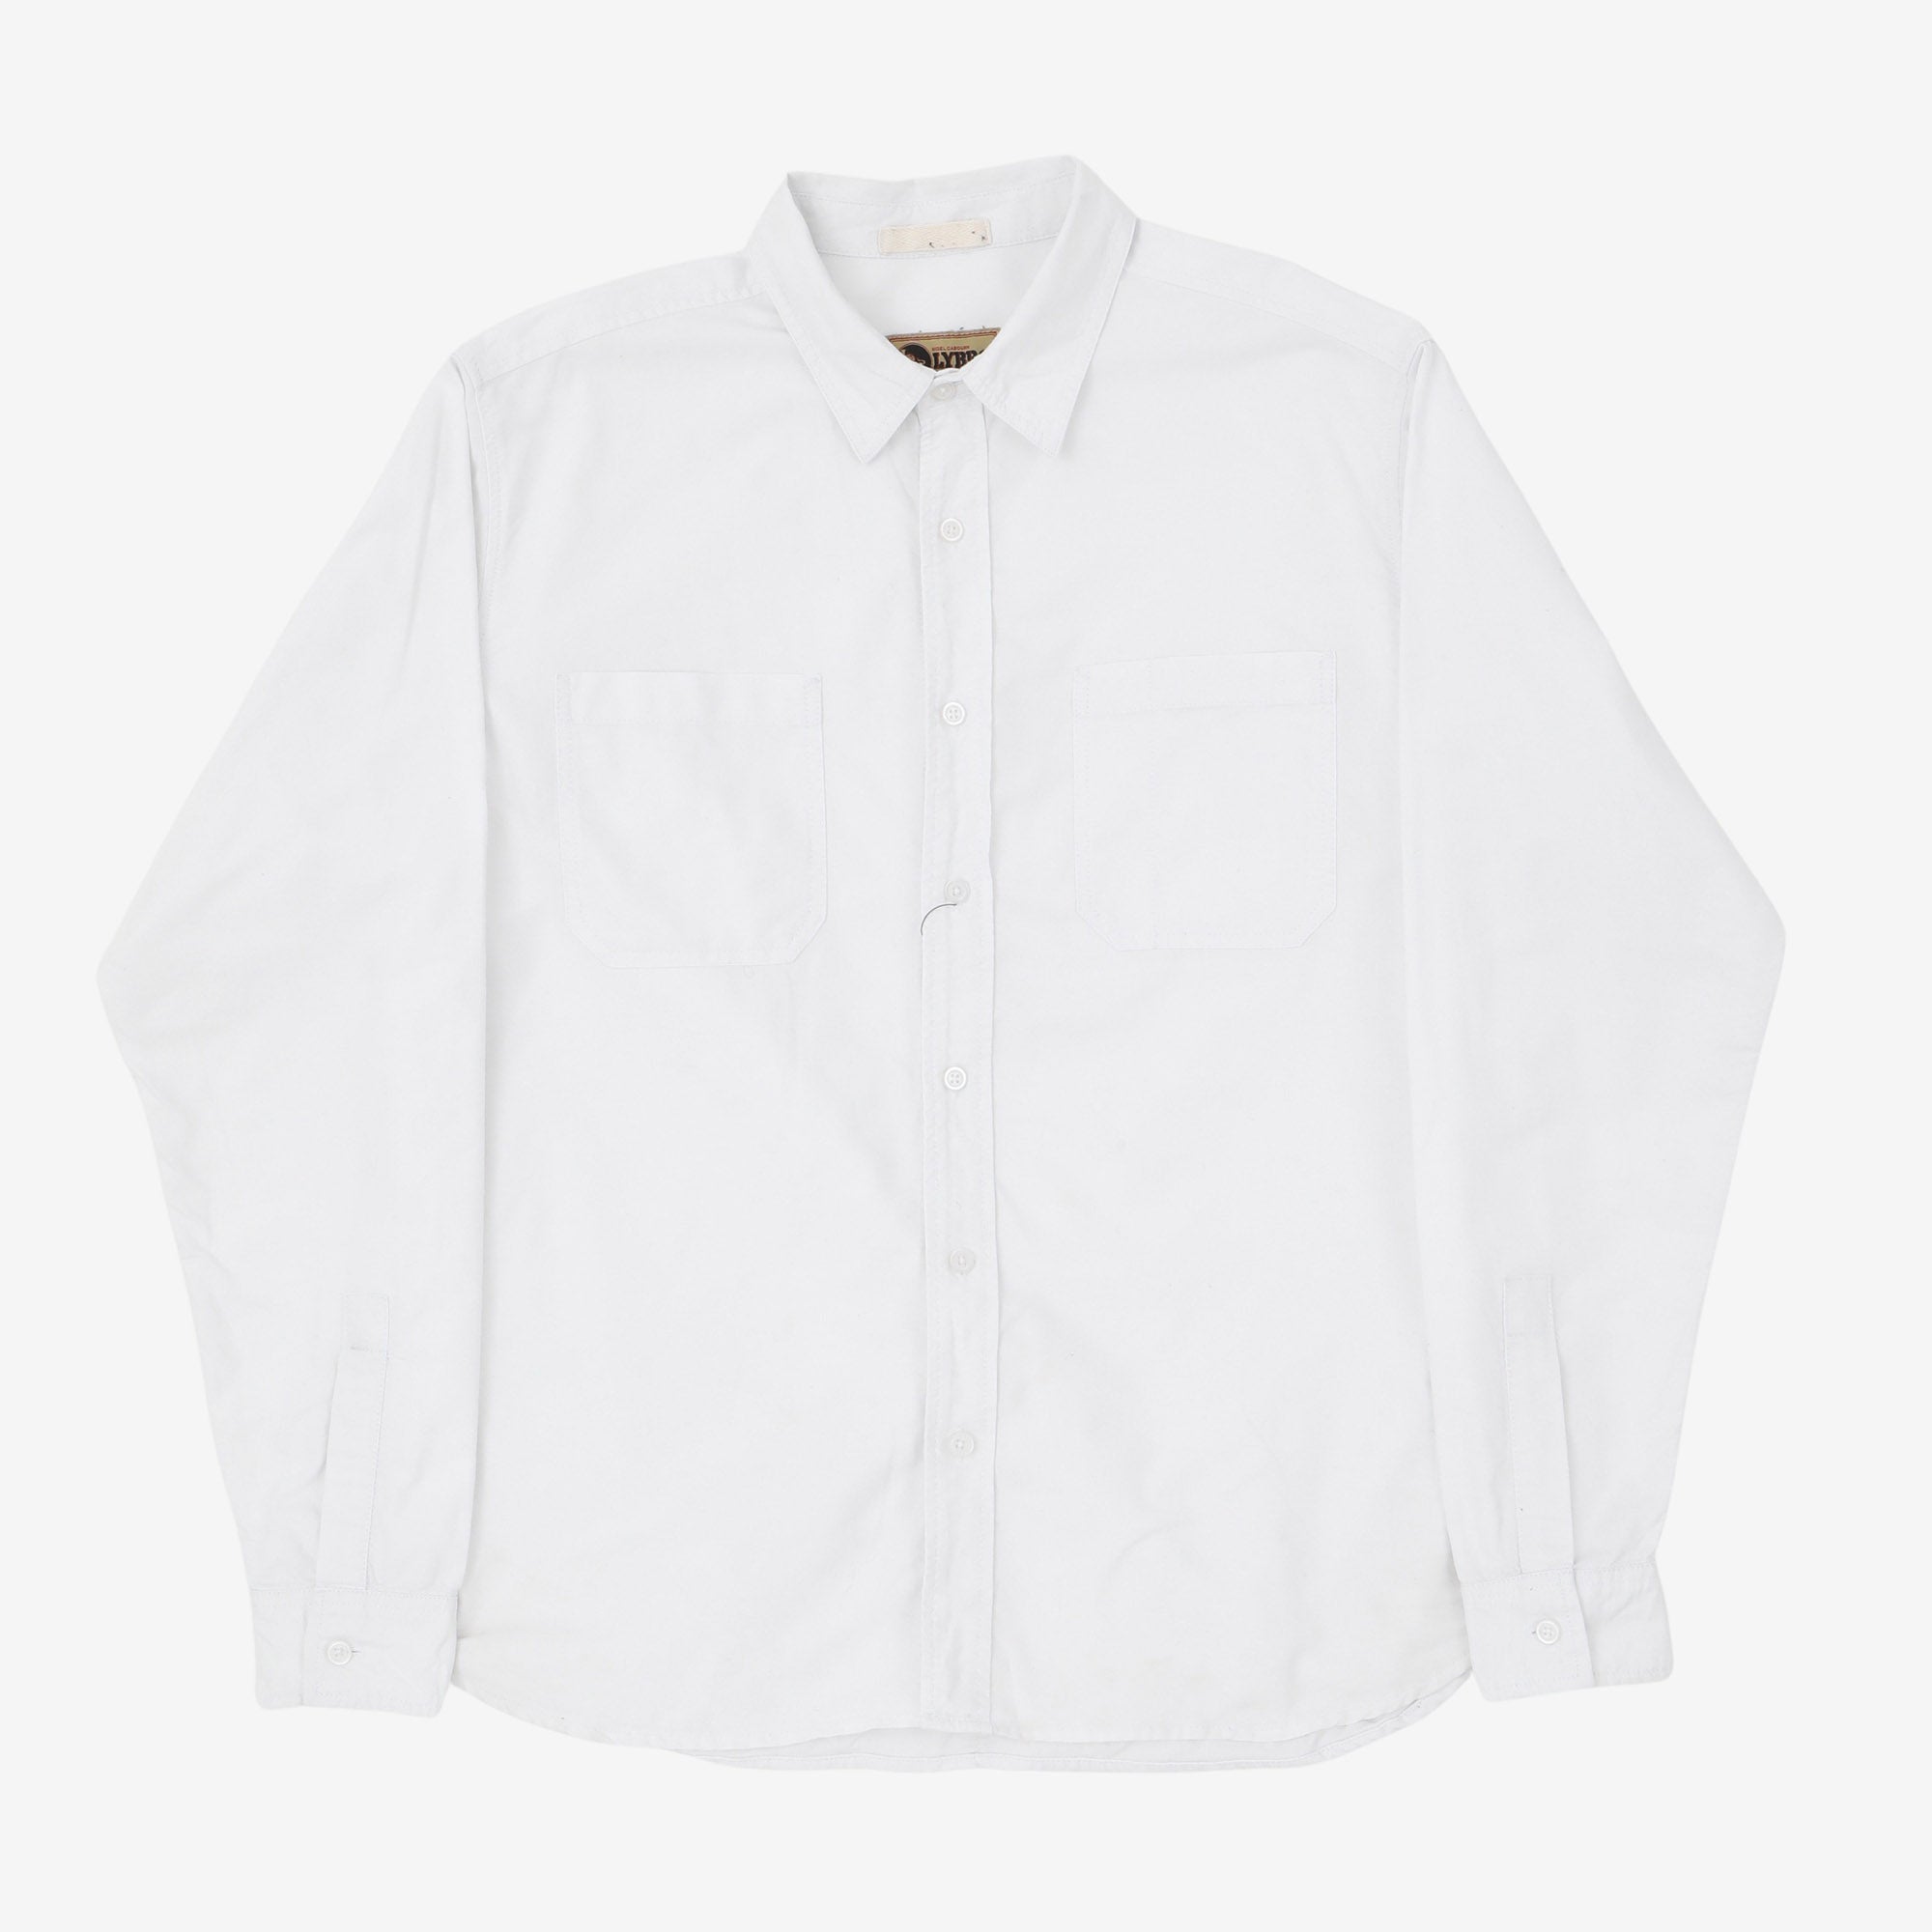 Lybro Cotton Shirt